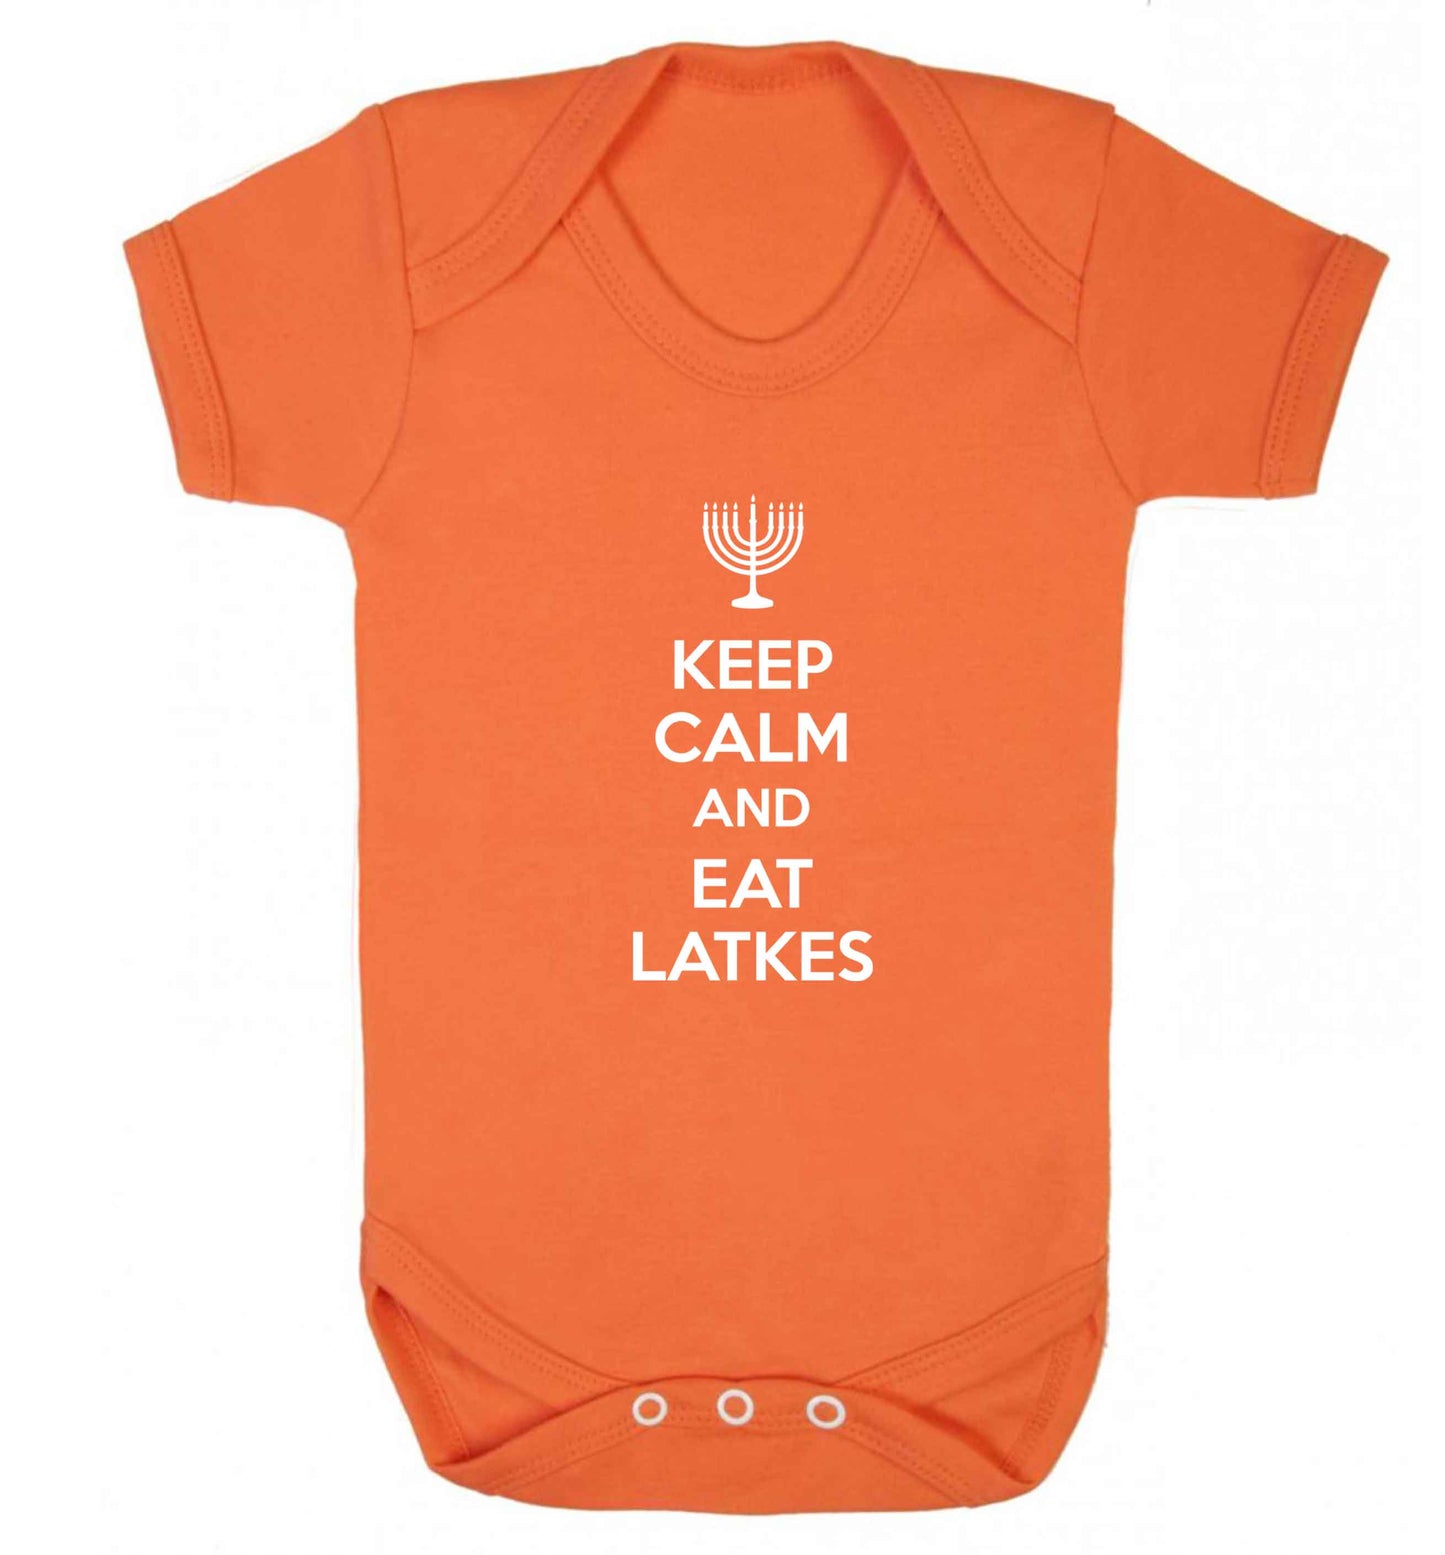 Keep calm and eat latkes baby vest orange 18-24 months